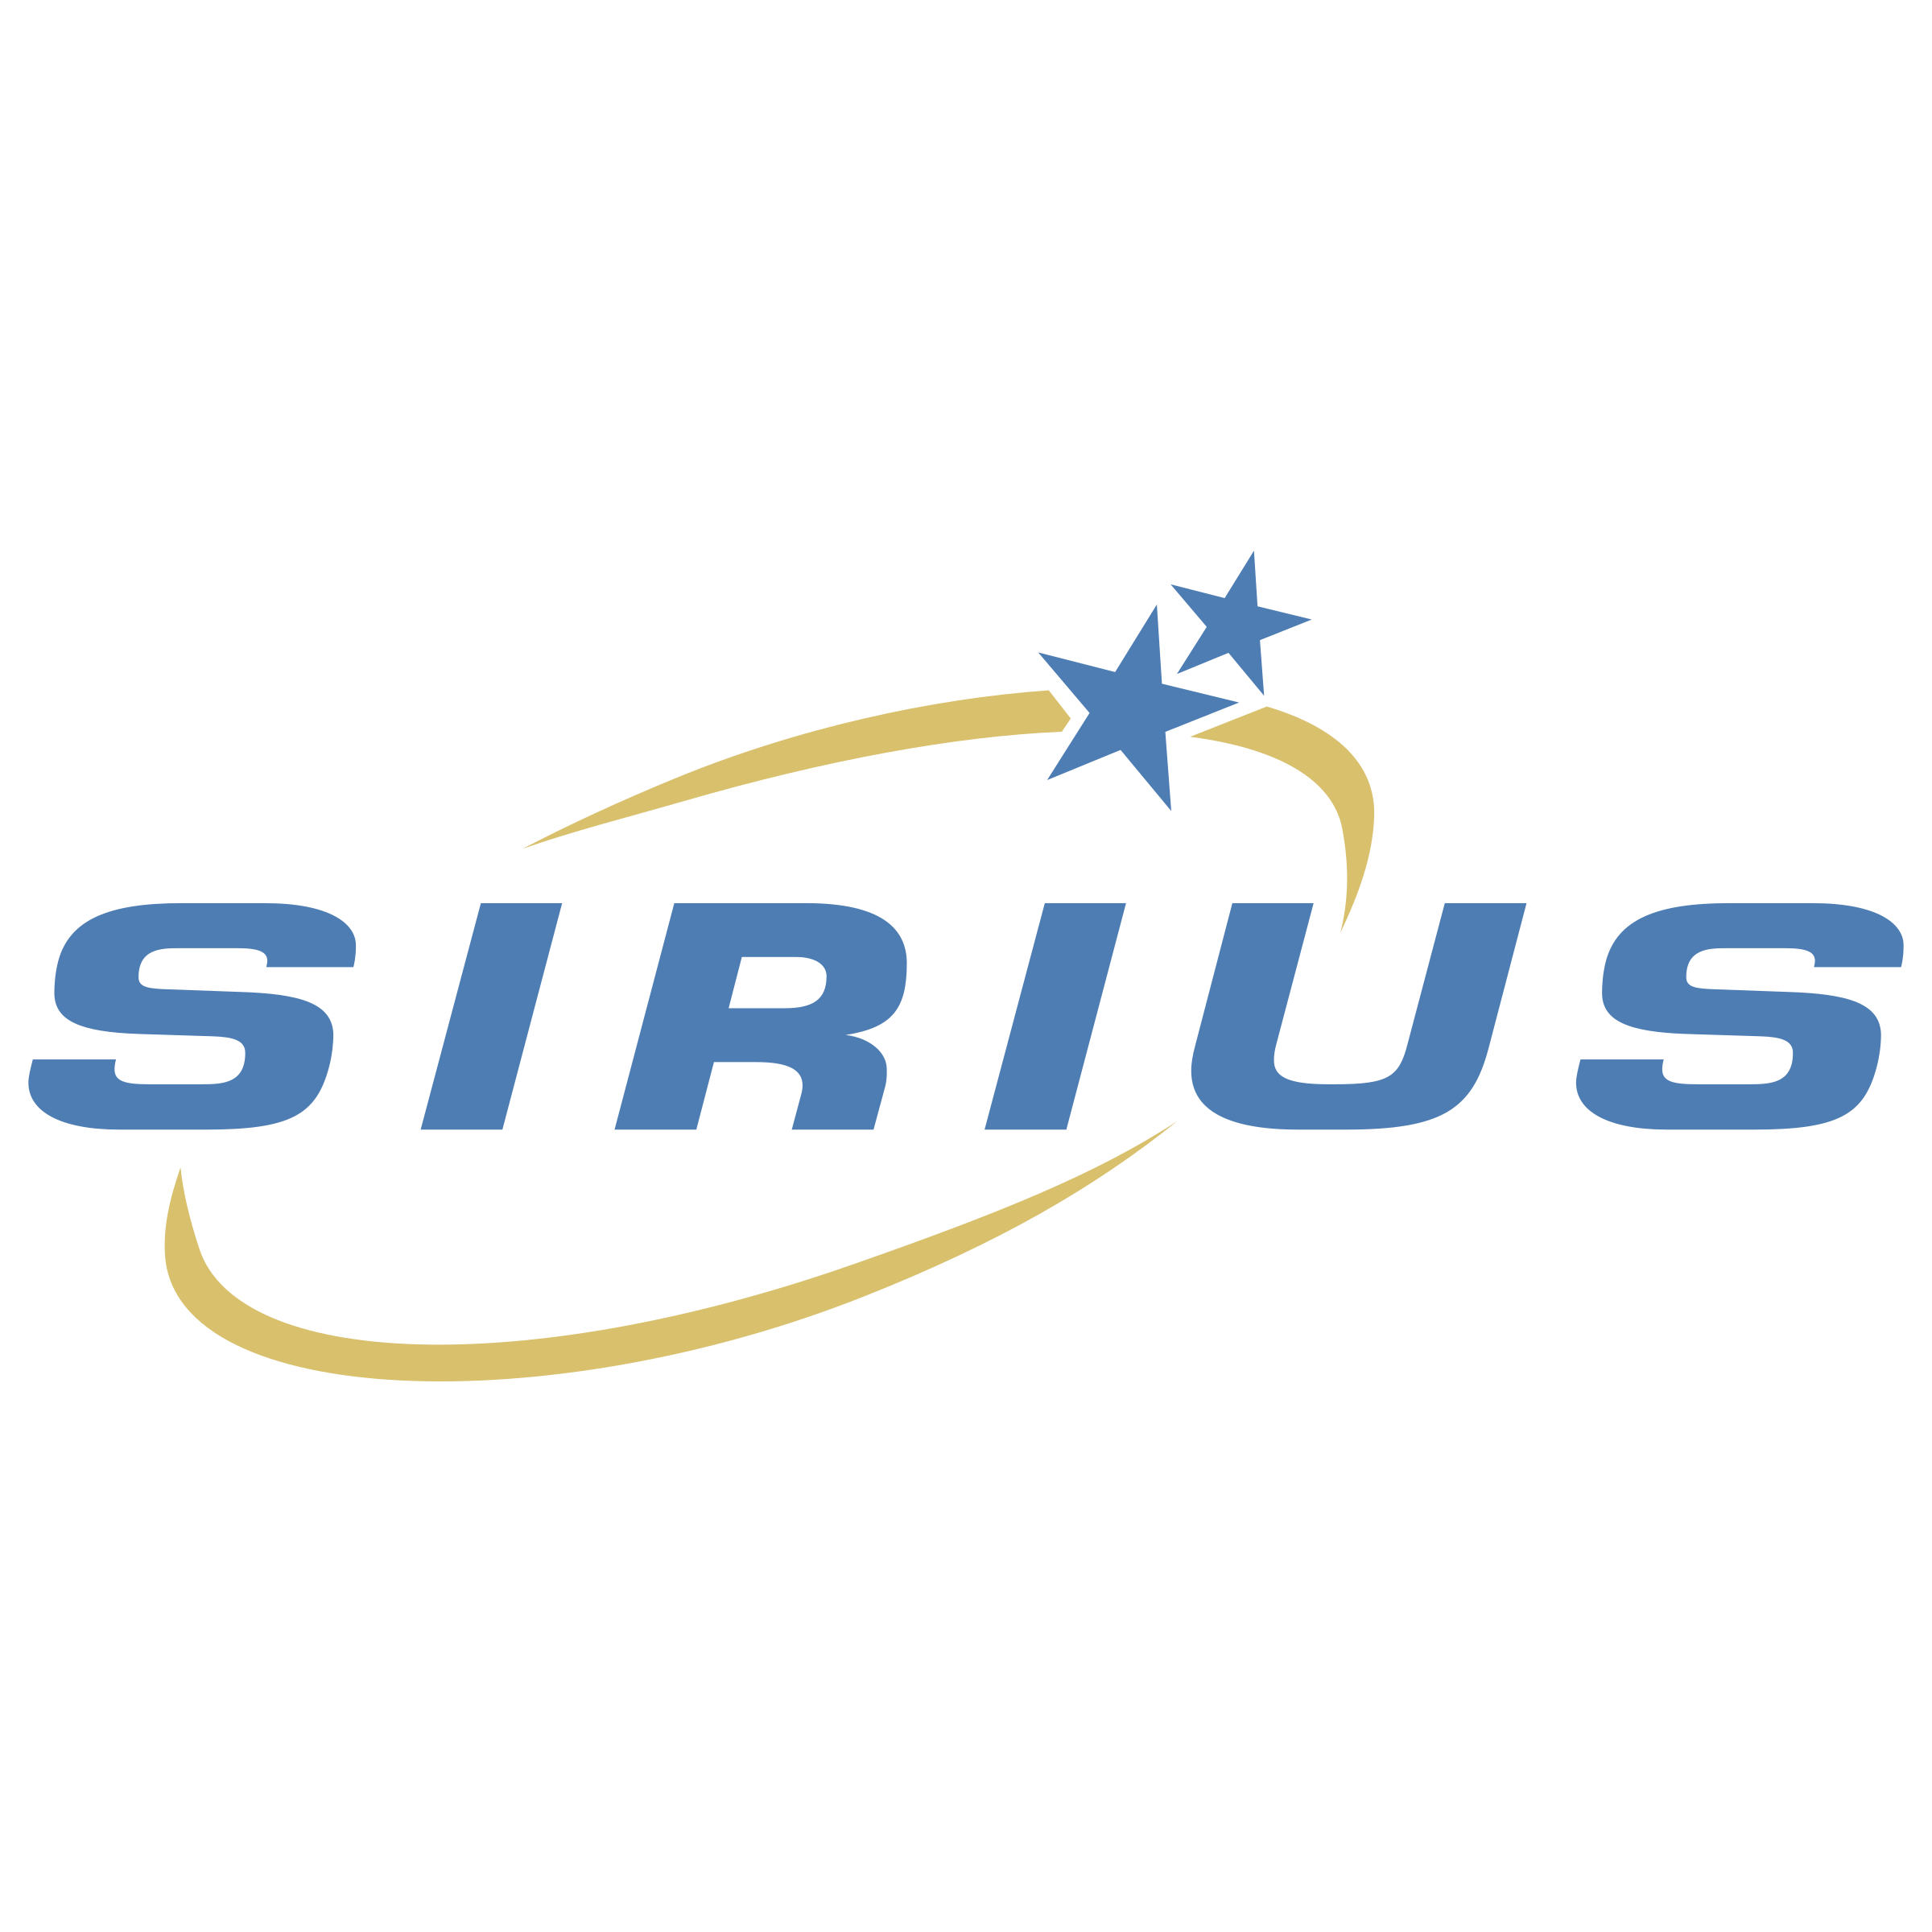 Sirrius Logo - Sirius Logo PNG Transparent & SVG Vector - Freebie Supply